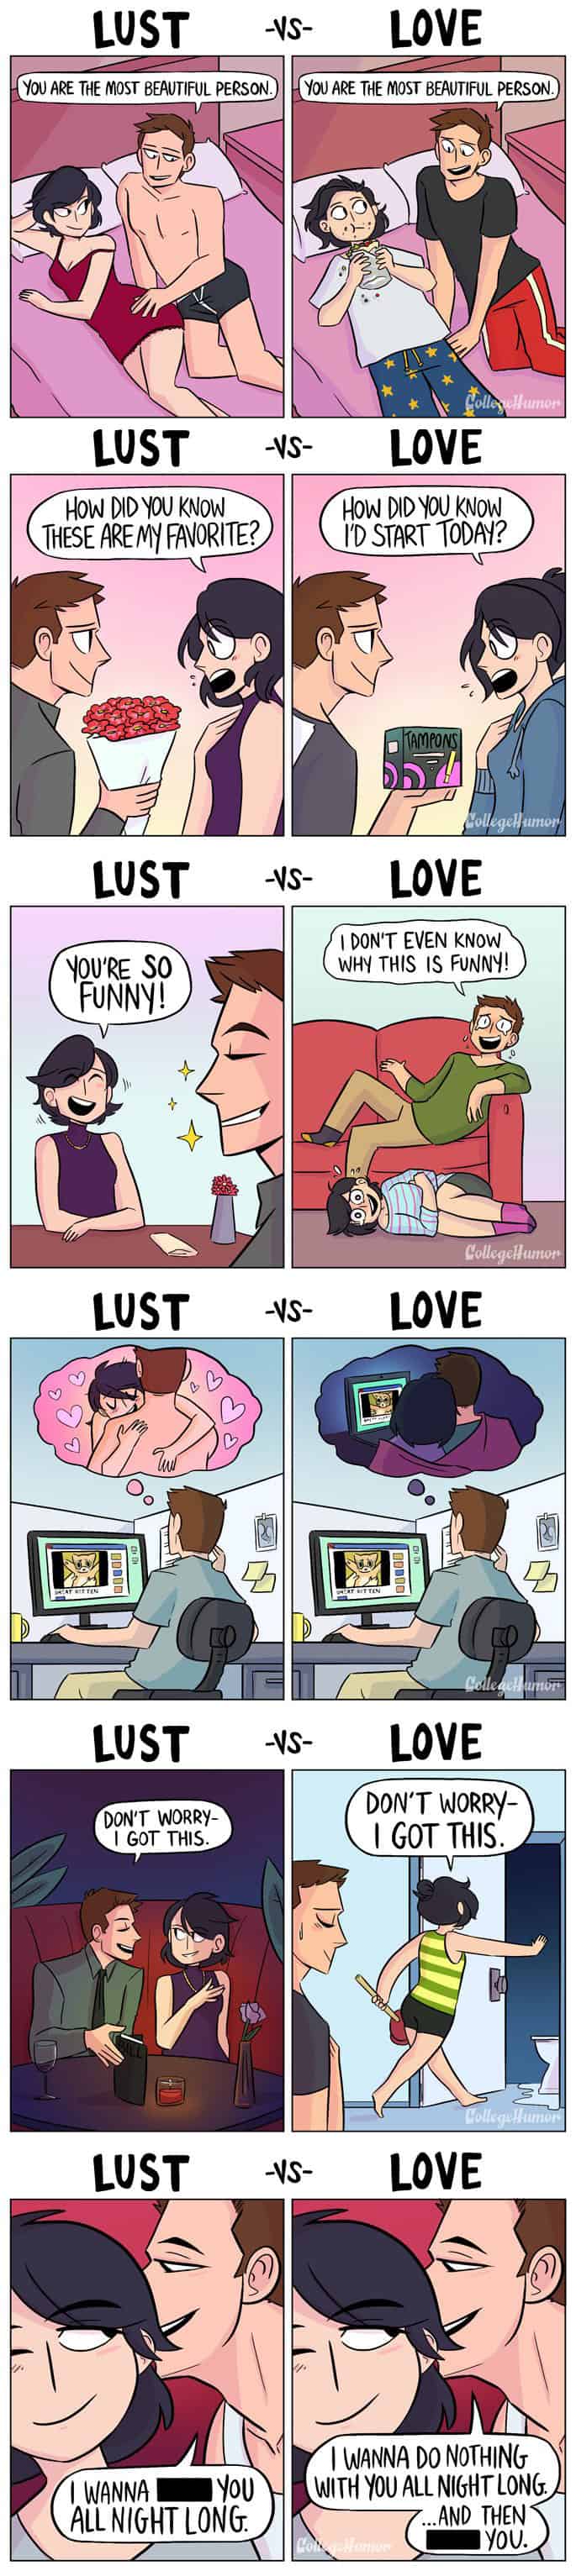 love-lust